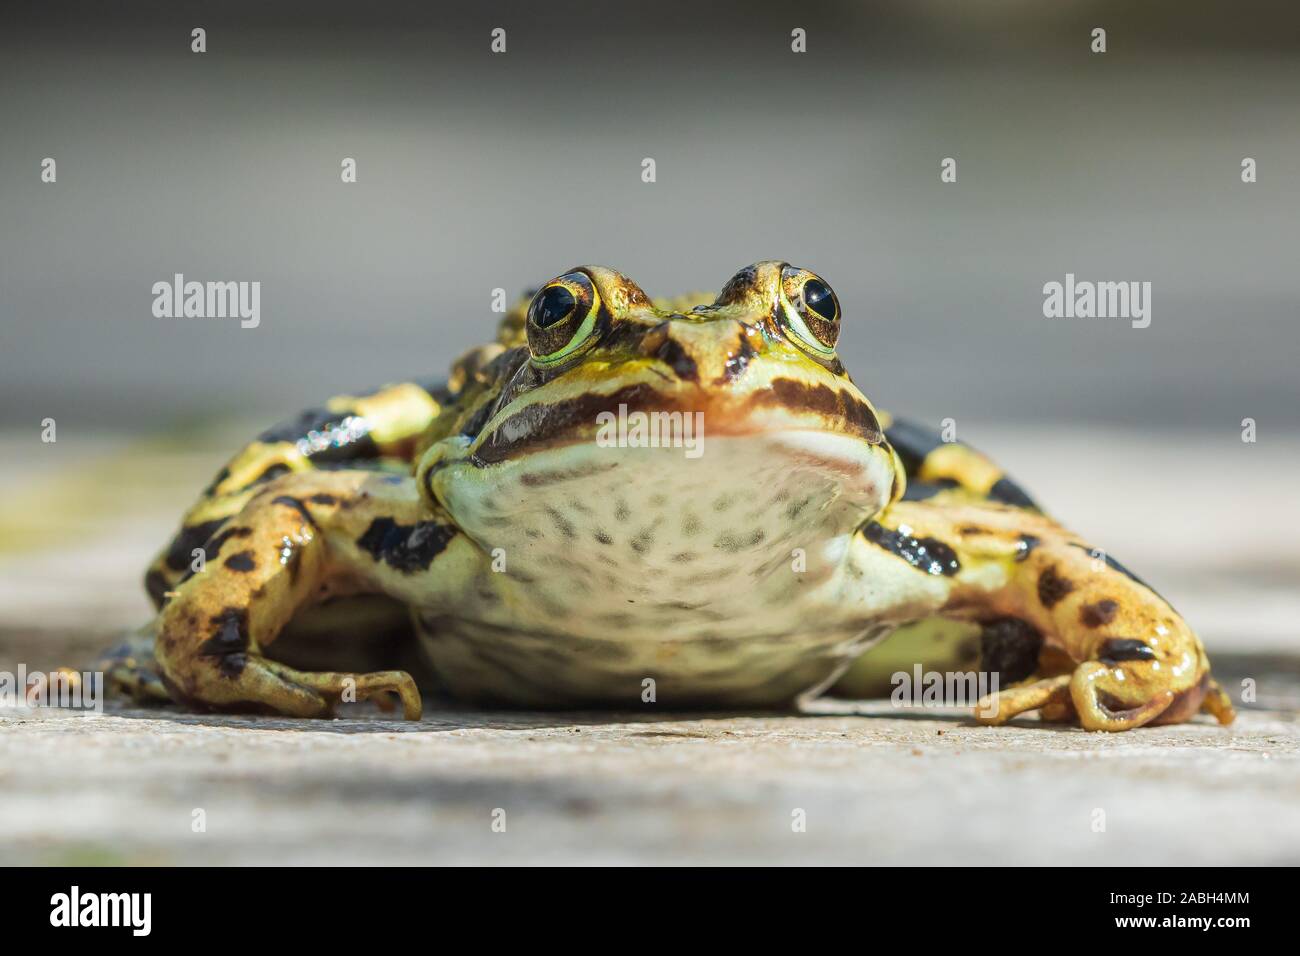 Closeup of a marsh frog, Pelophylax ridibundus, on a garden floor. Low point of view, selective focus. Stock Photo